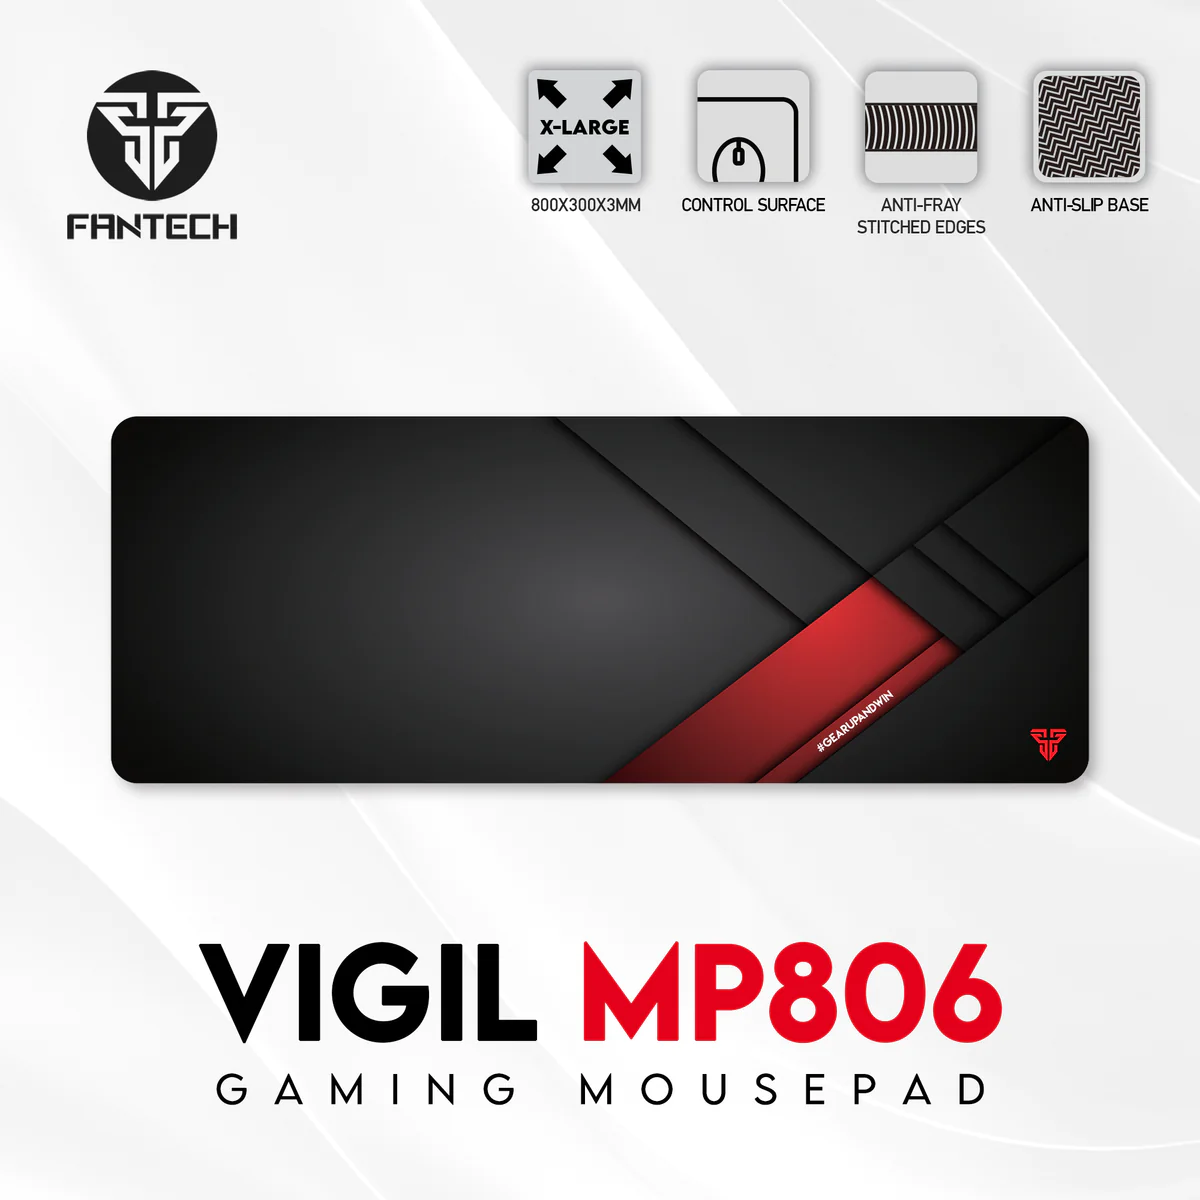 Fantech Vigil MP806 Gaming Mouse Pad